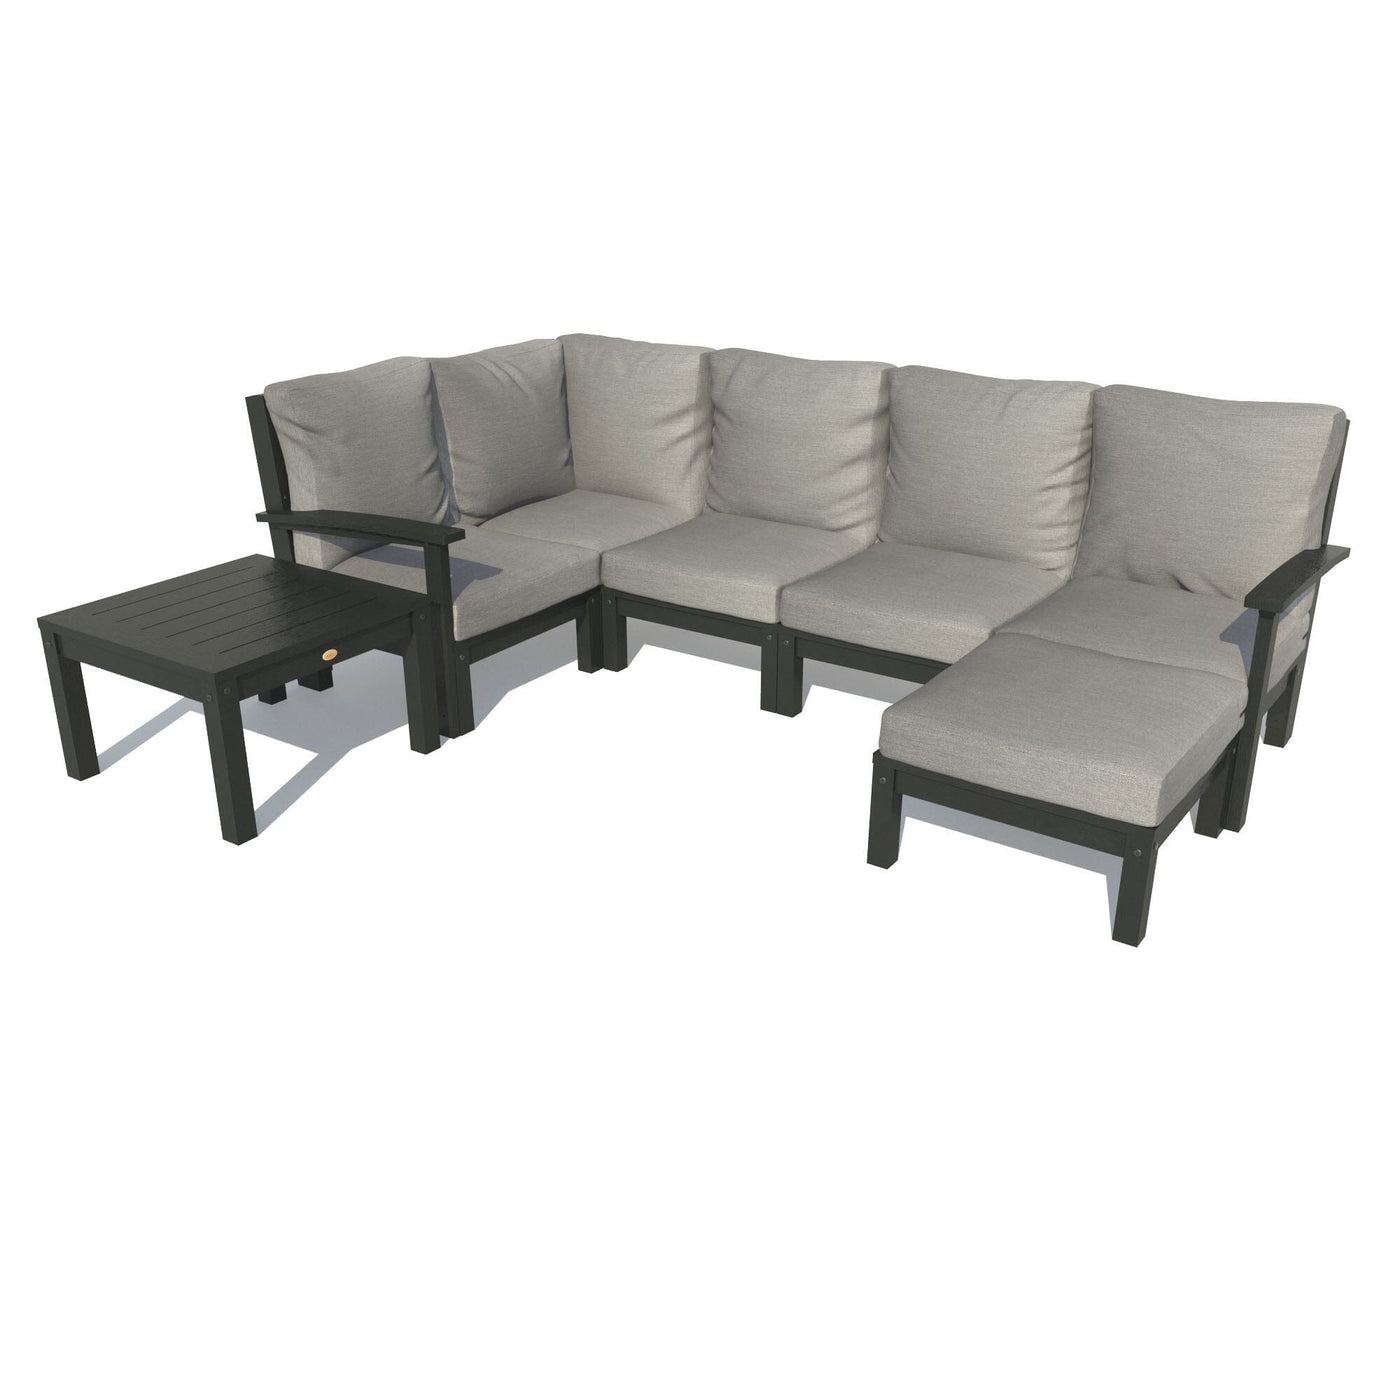 Bespoke Deep Seating: 7 Piece Sectional Set with Ottoman and Side Table Deep Seating Highwood USA Stone Gray Black 